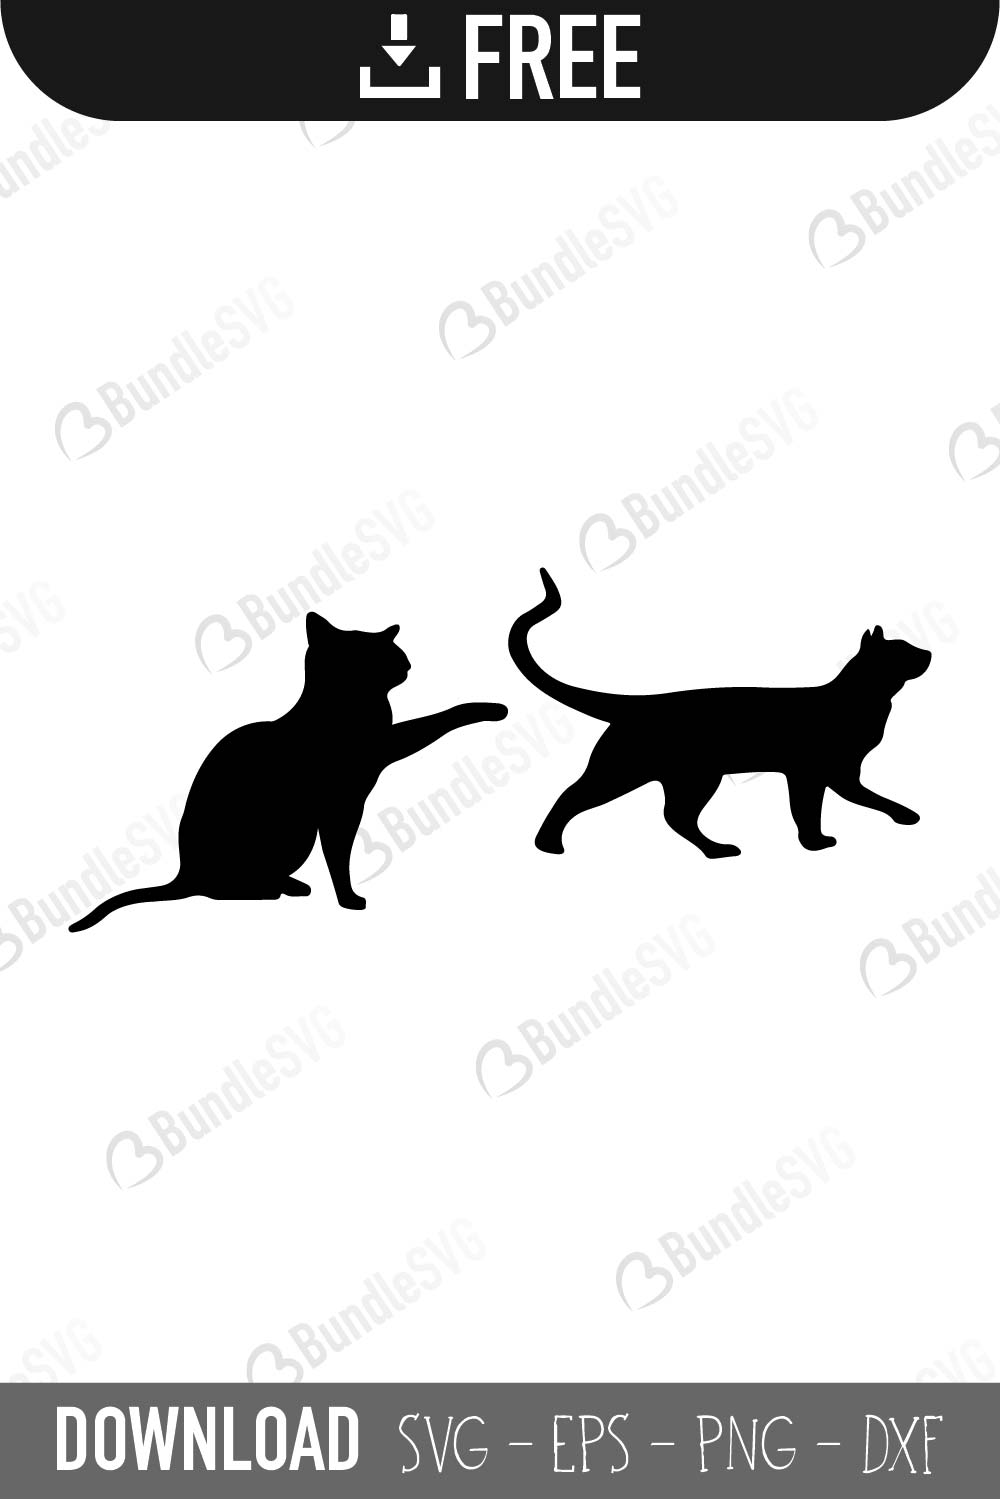 Download Cat Silhouette SVG Cut Files Free Download | BundleSVG